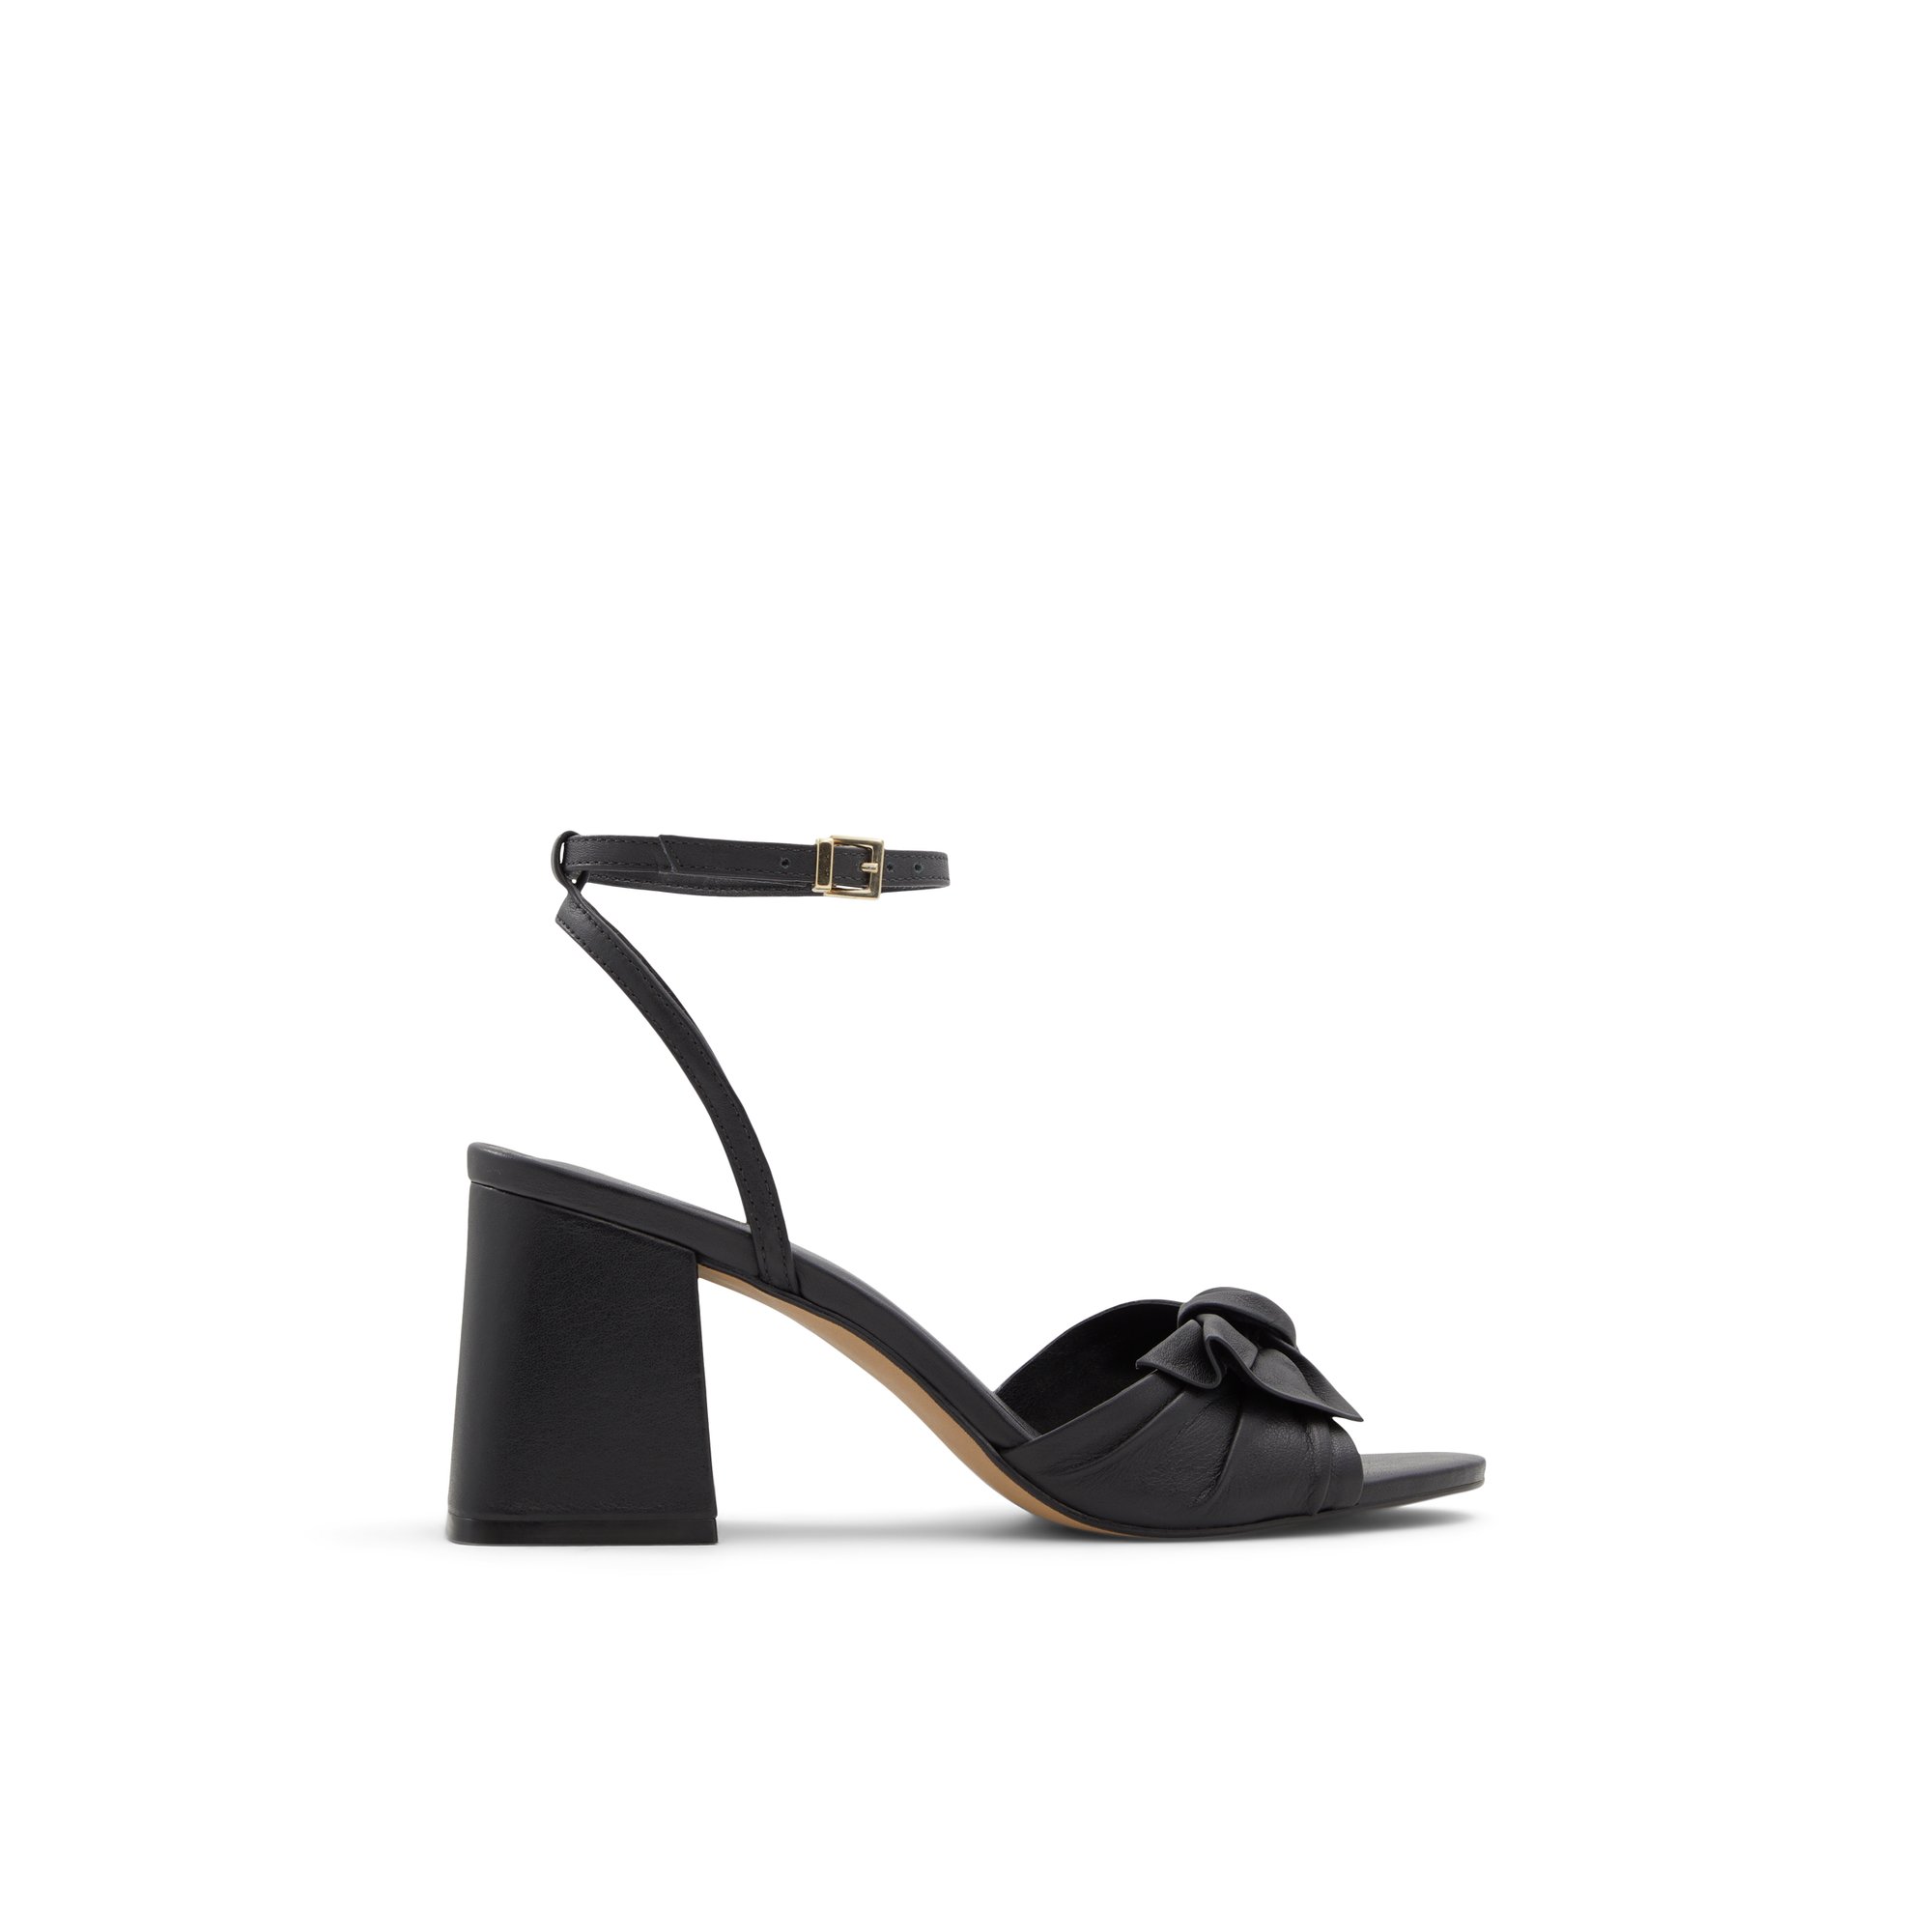 ALDO Angelbow - Women's Sandals Strappy - Black